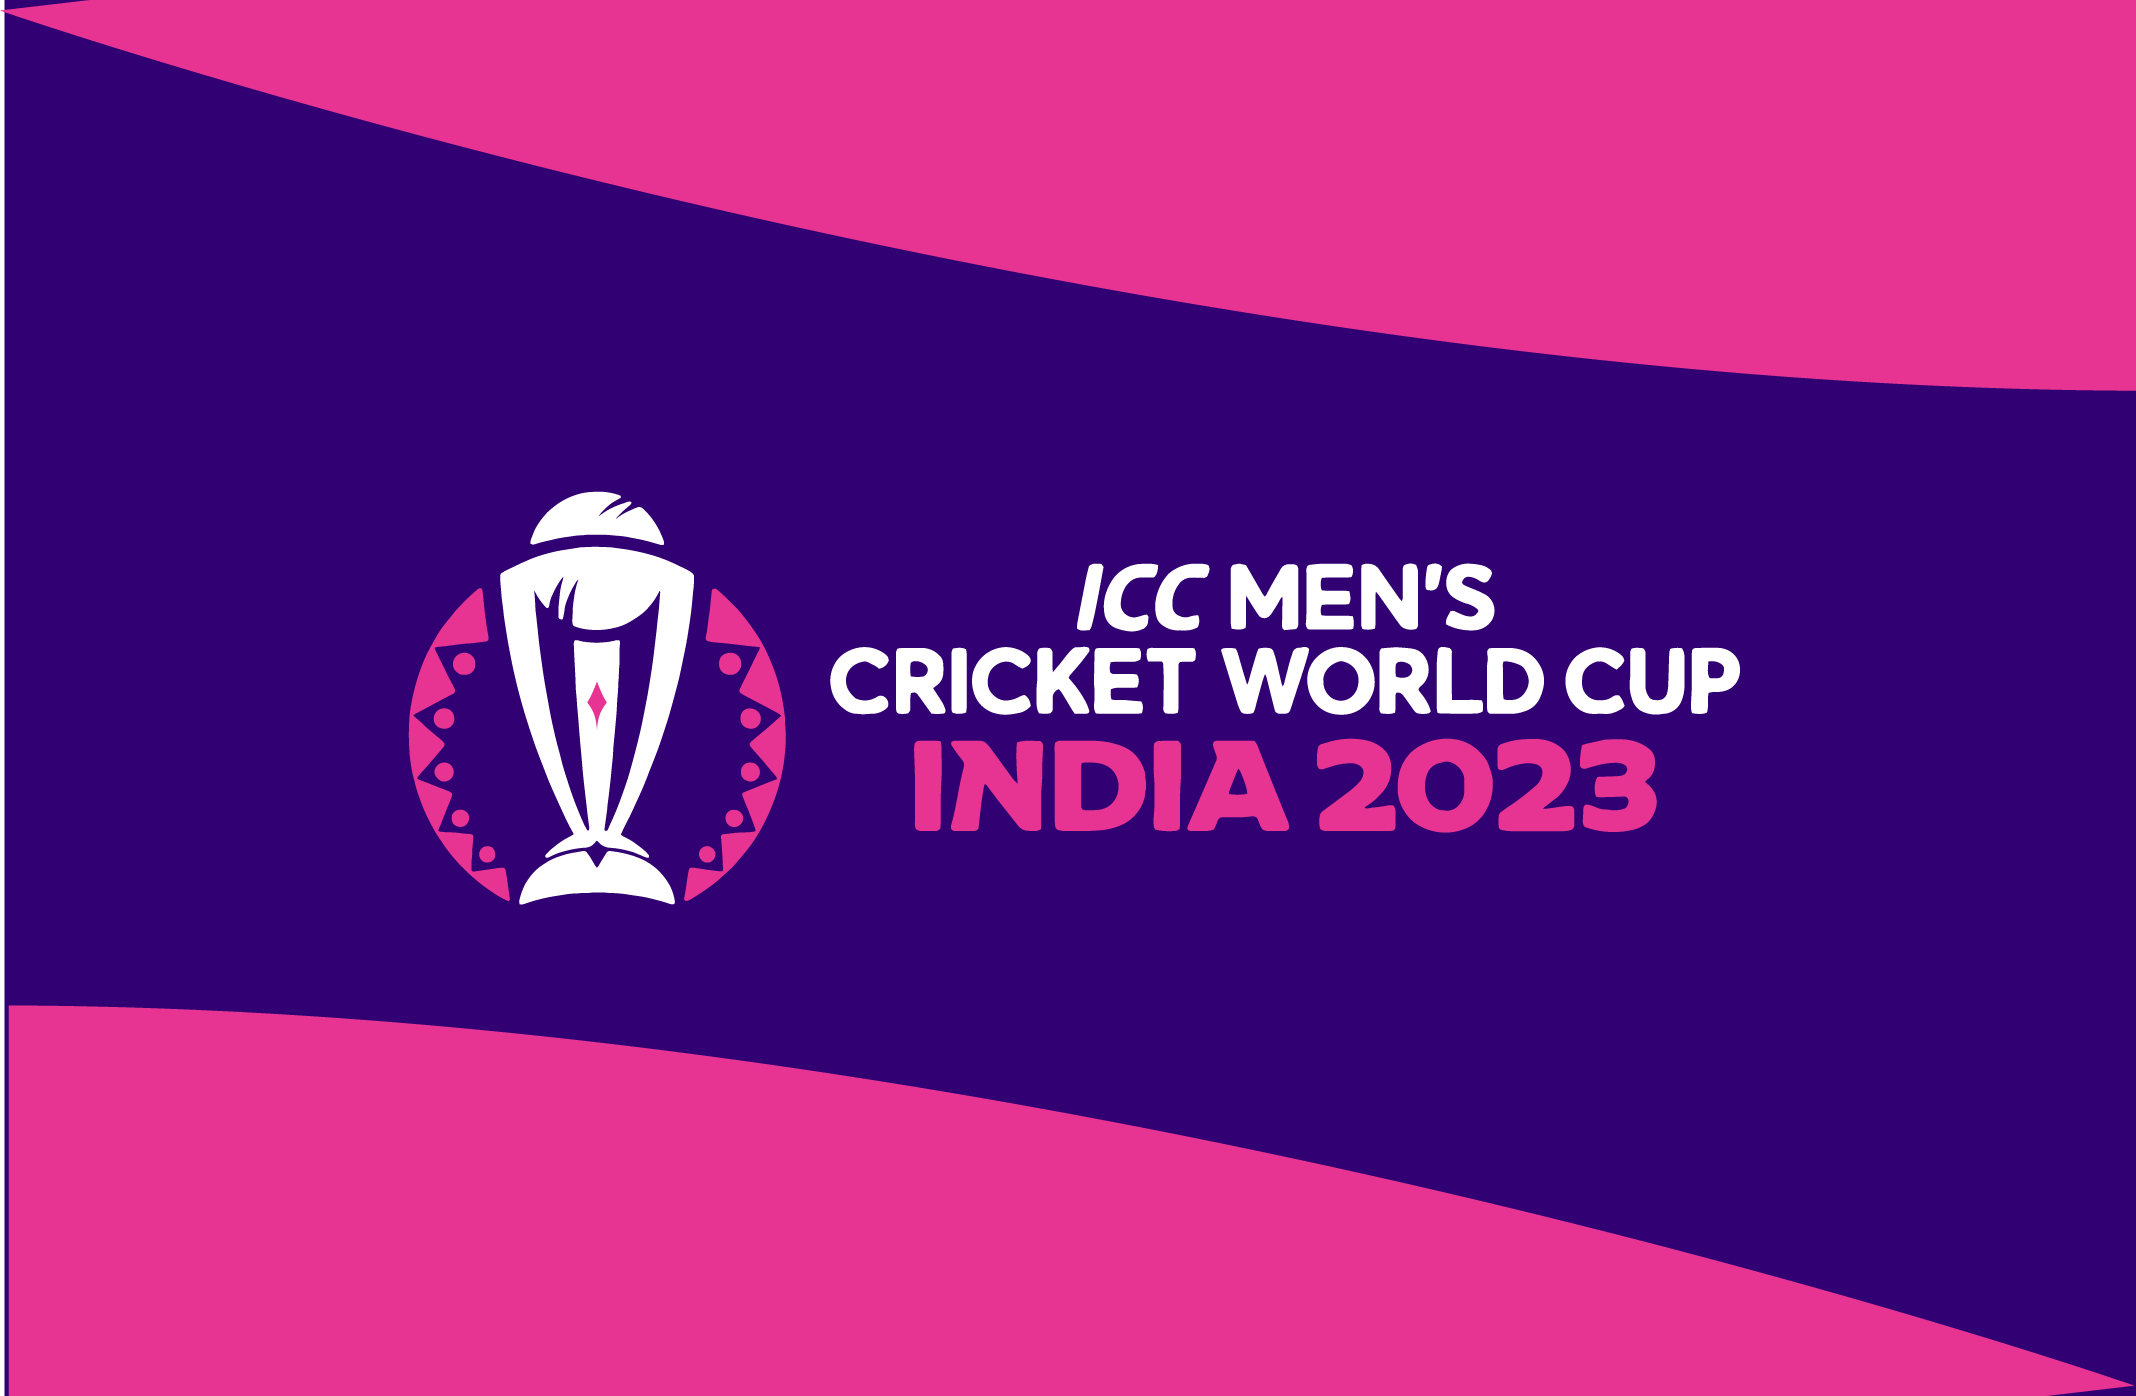 icc men's cricket world cup india 2023 logo